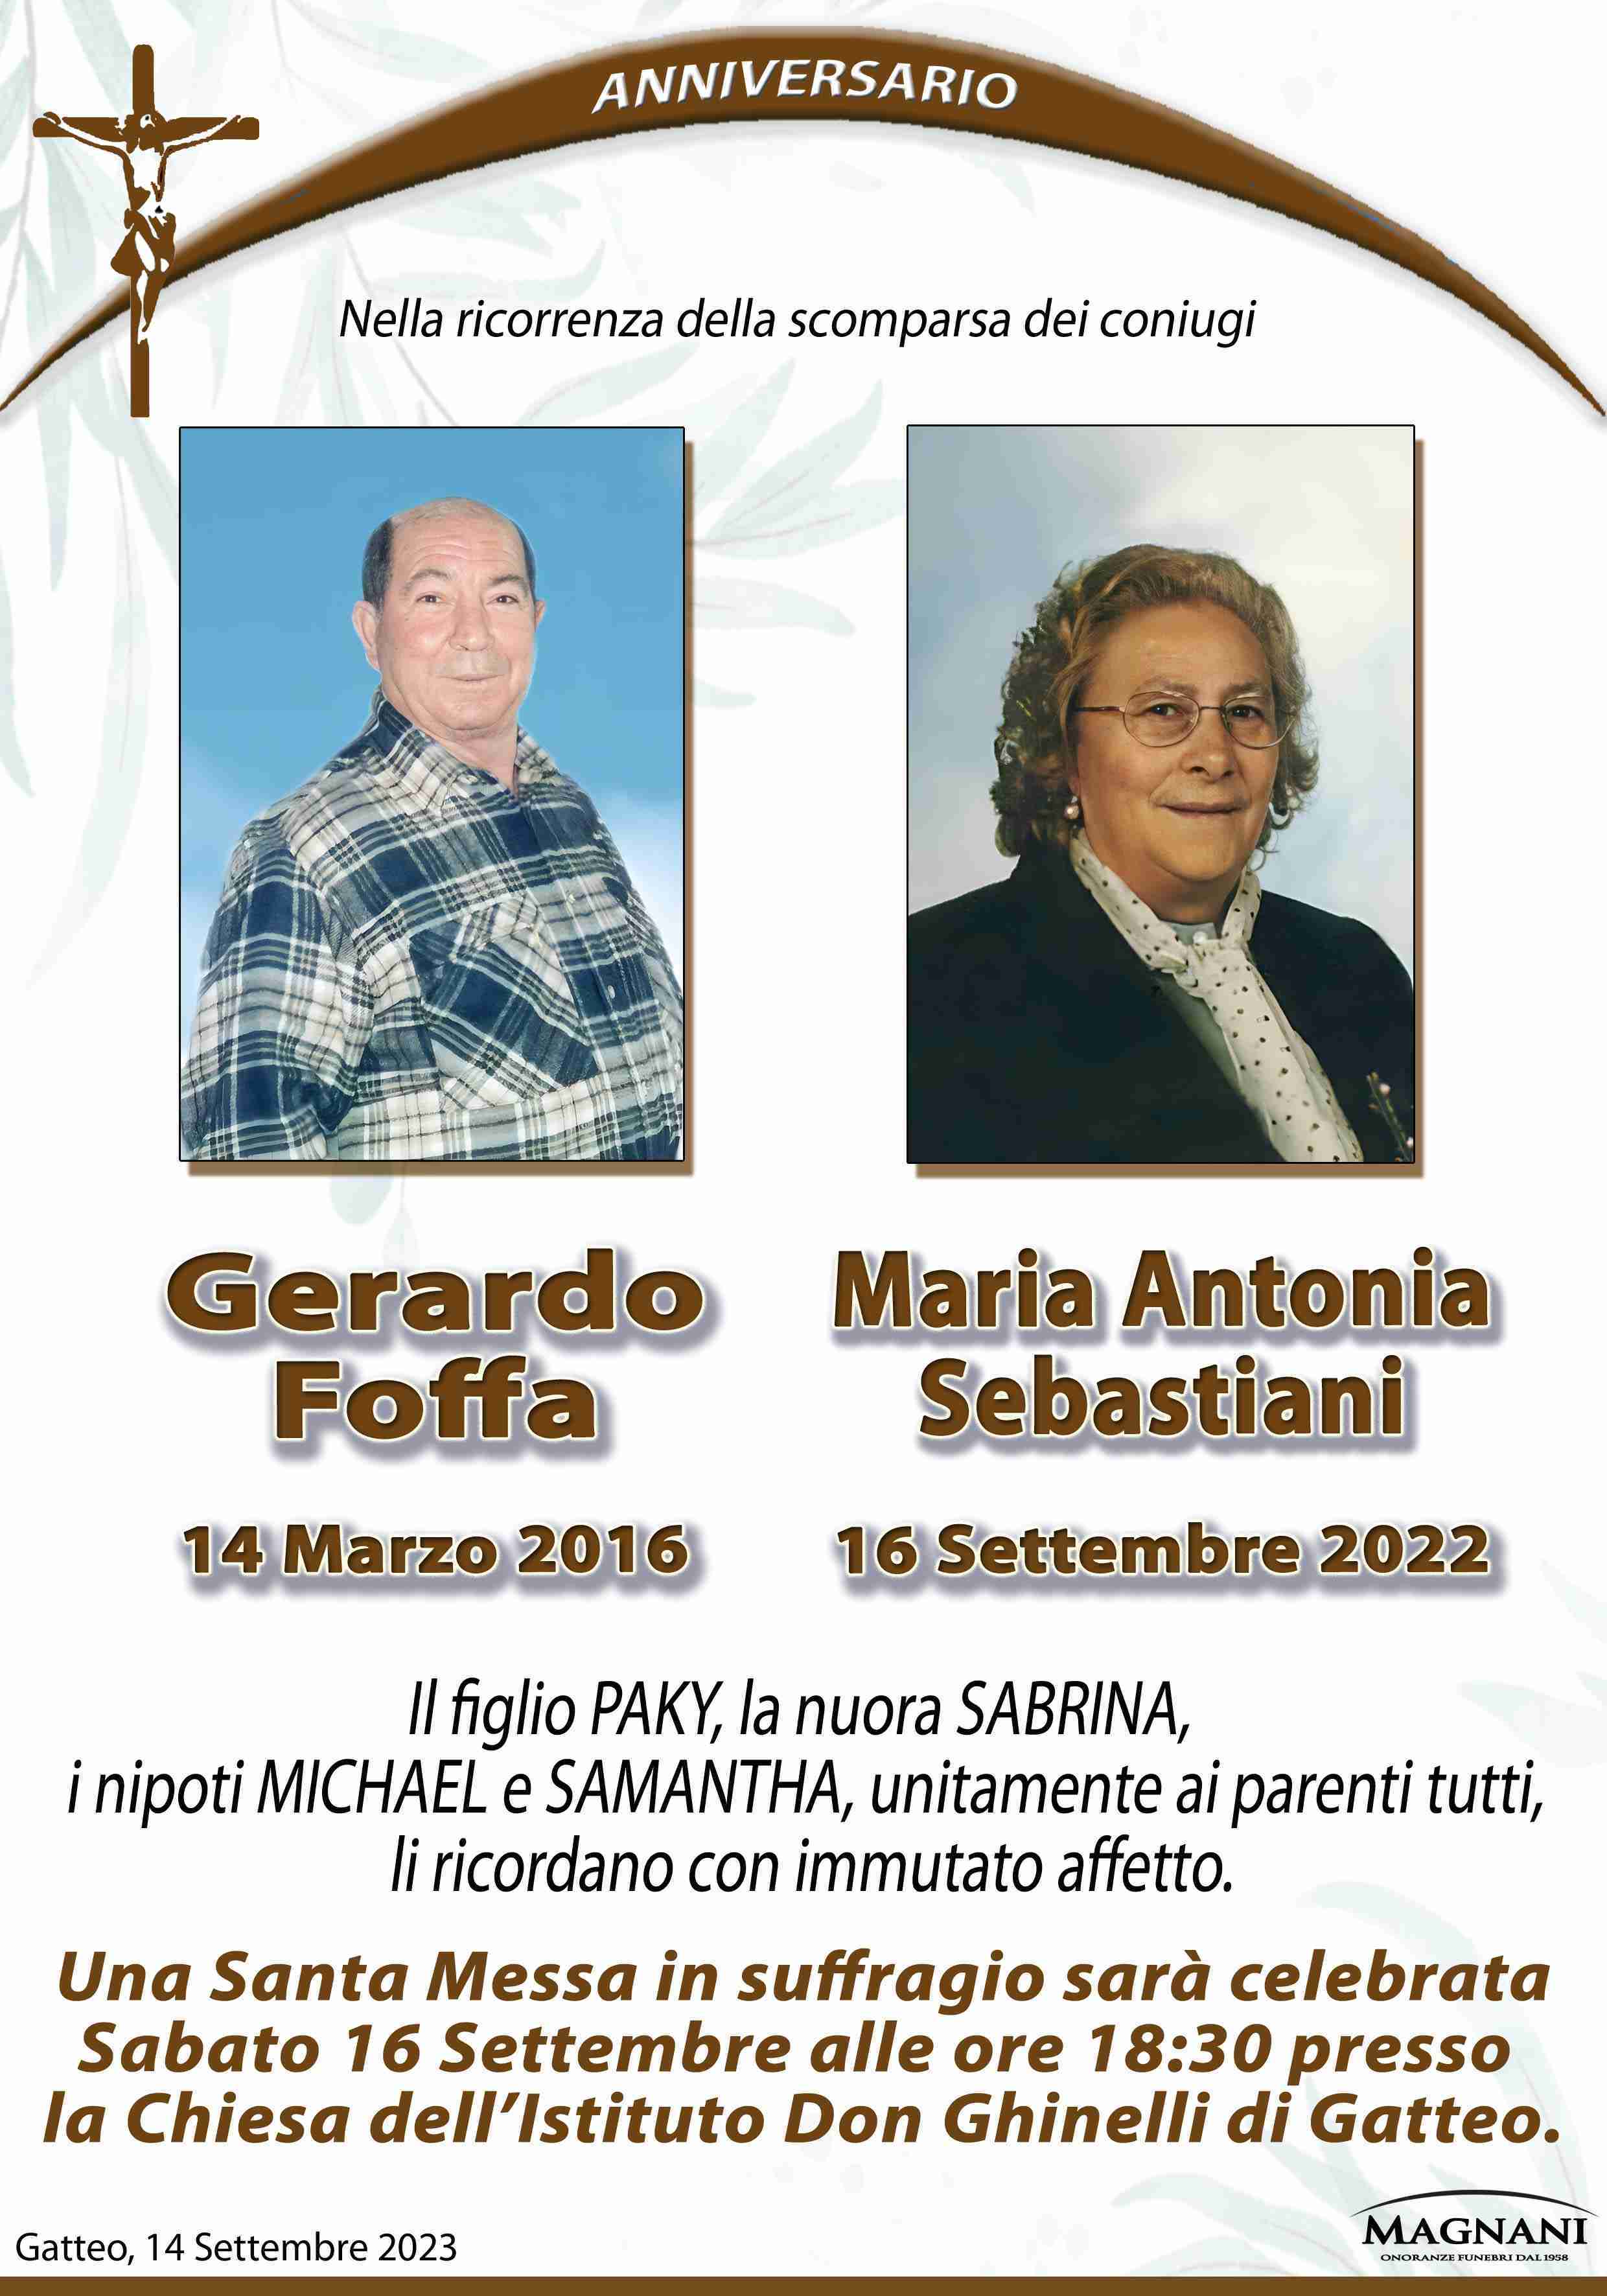 Gerardo Foffa e Maria Antonia Sebastiani